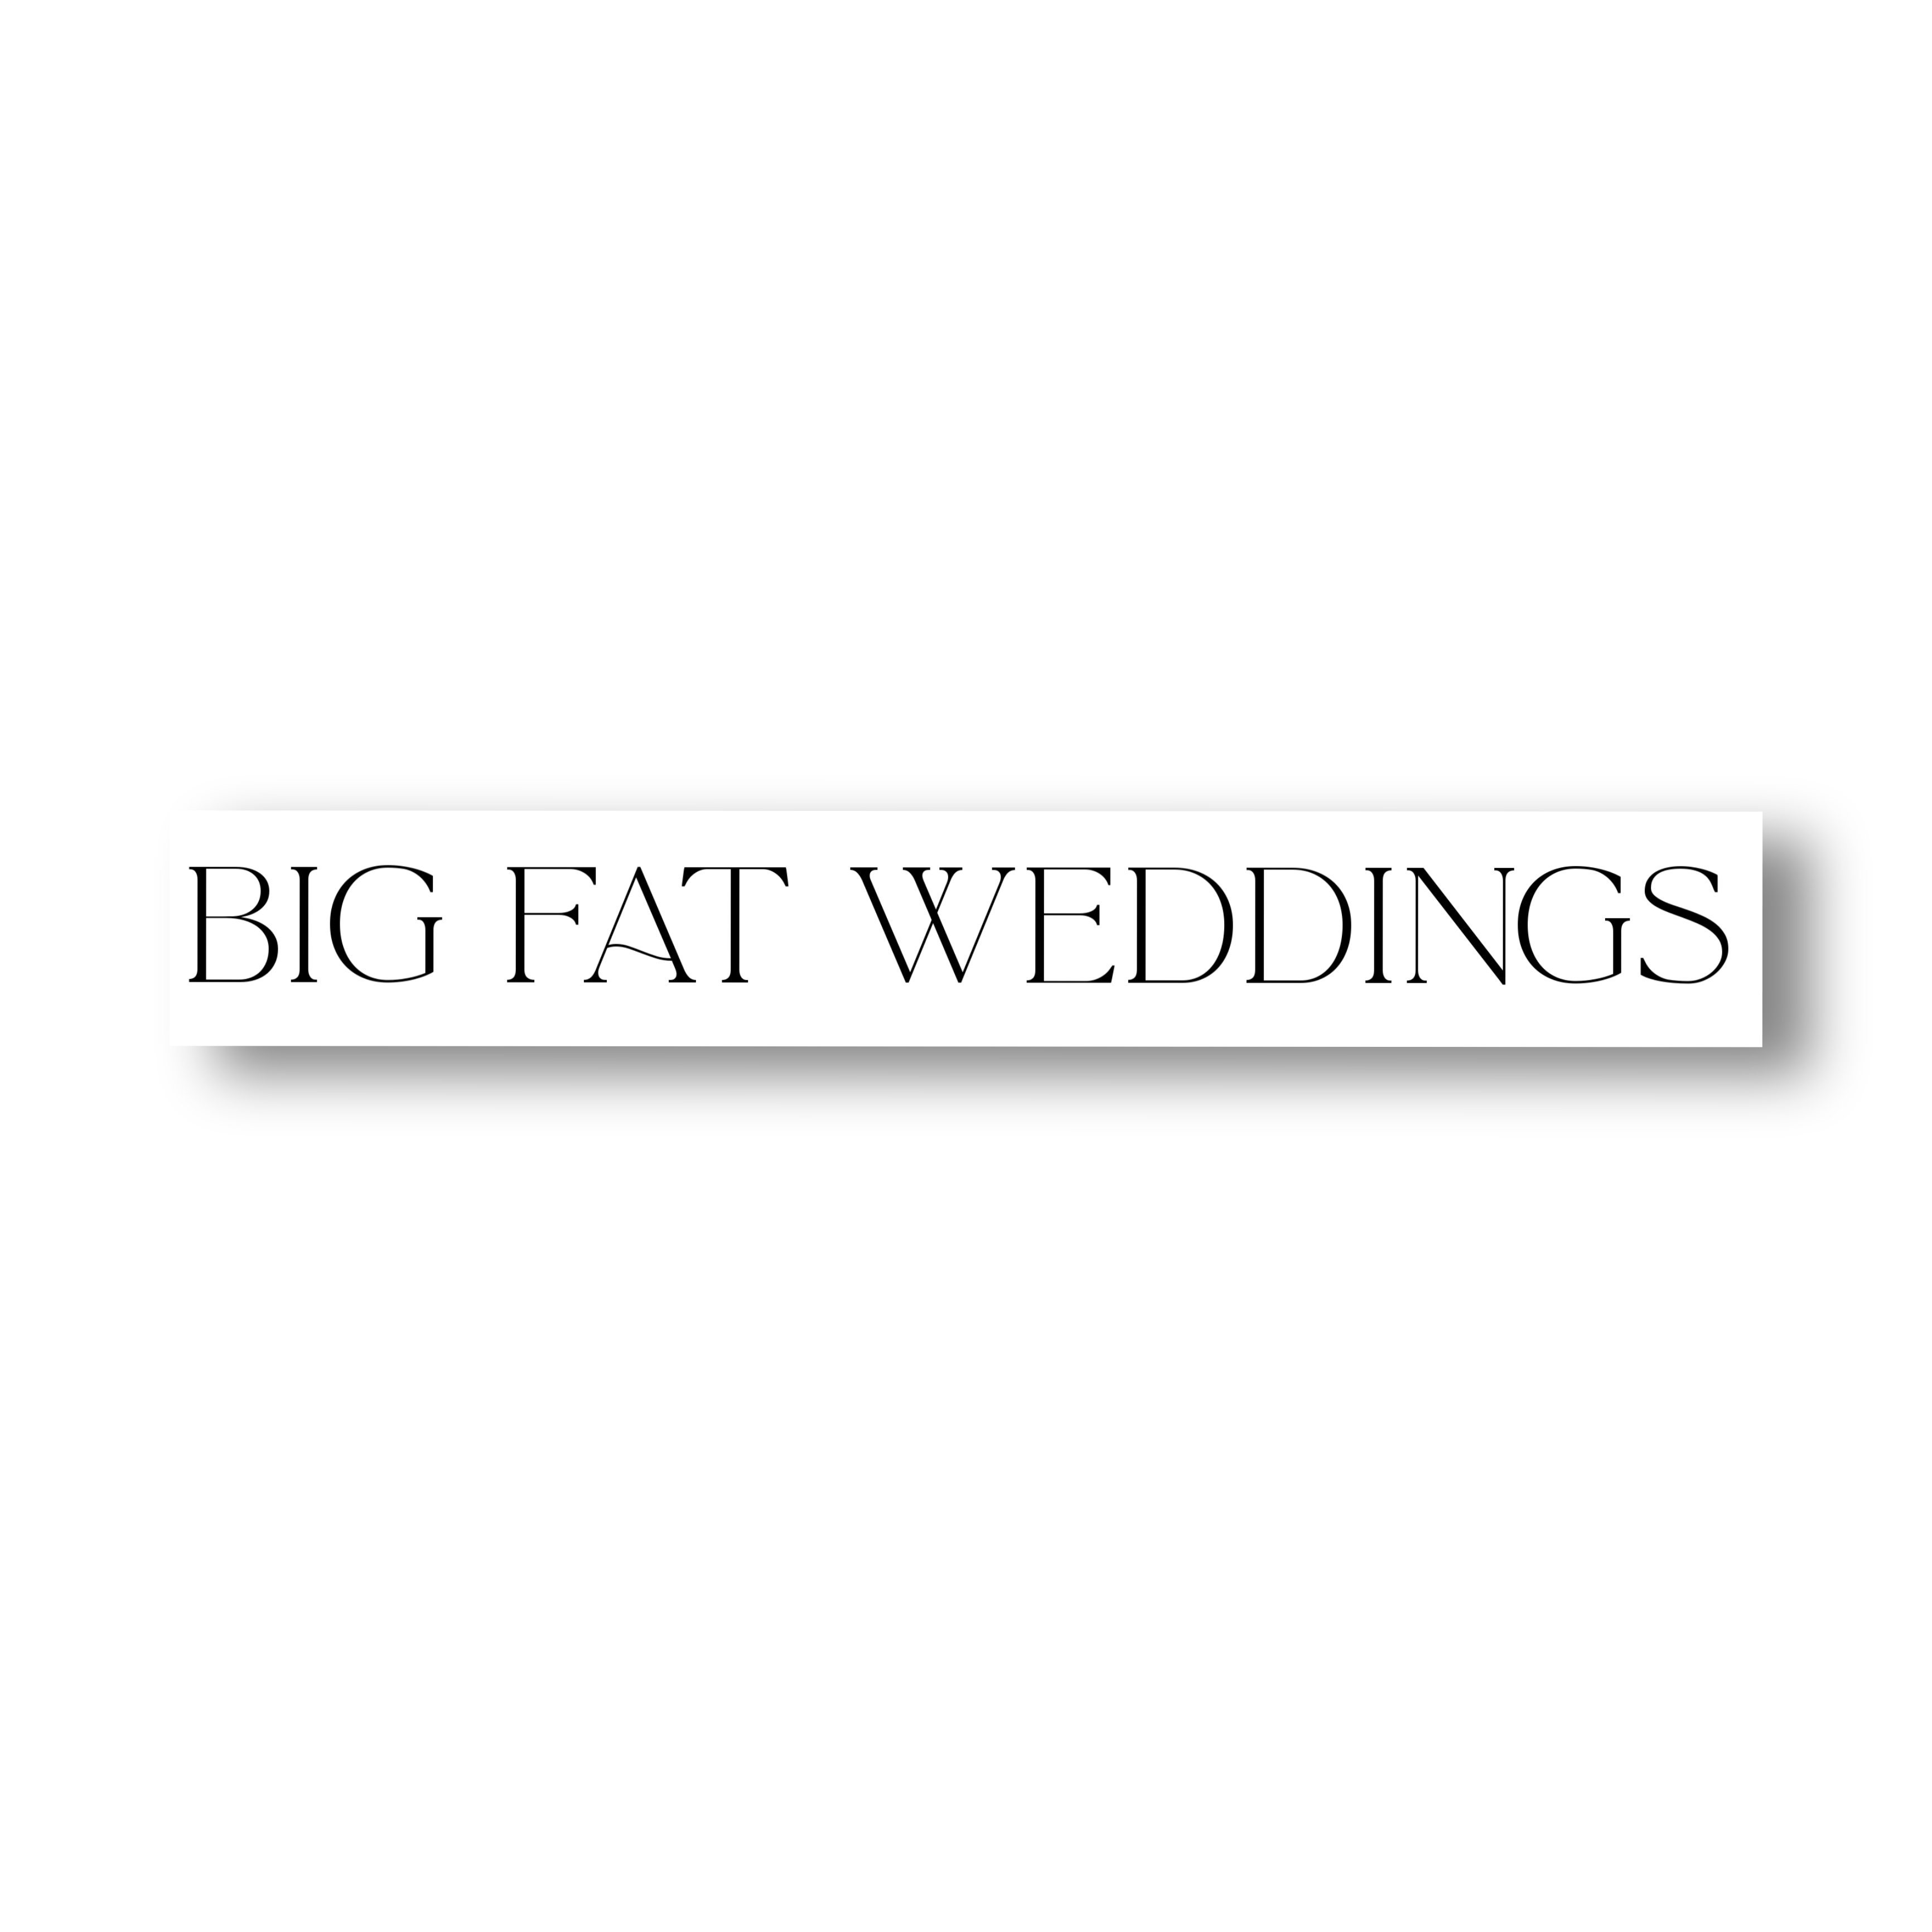 BIG FAT WEDDINGS